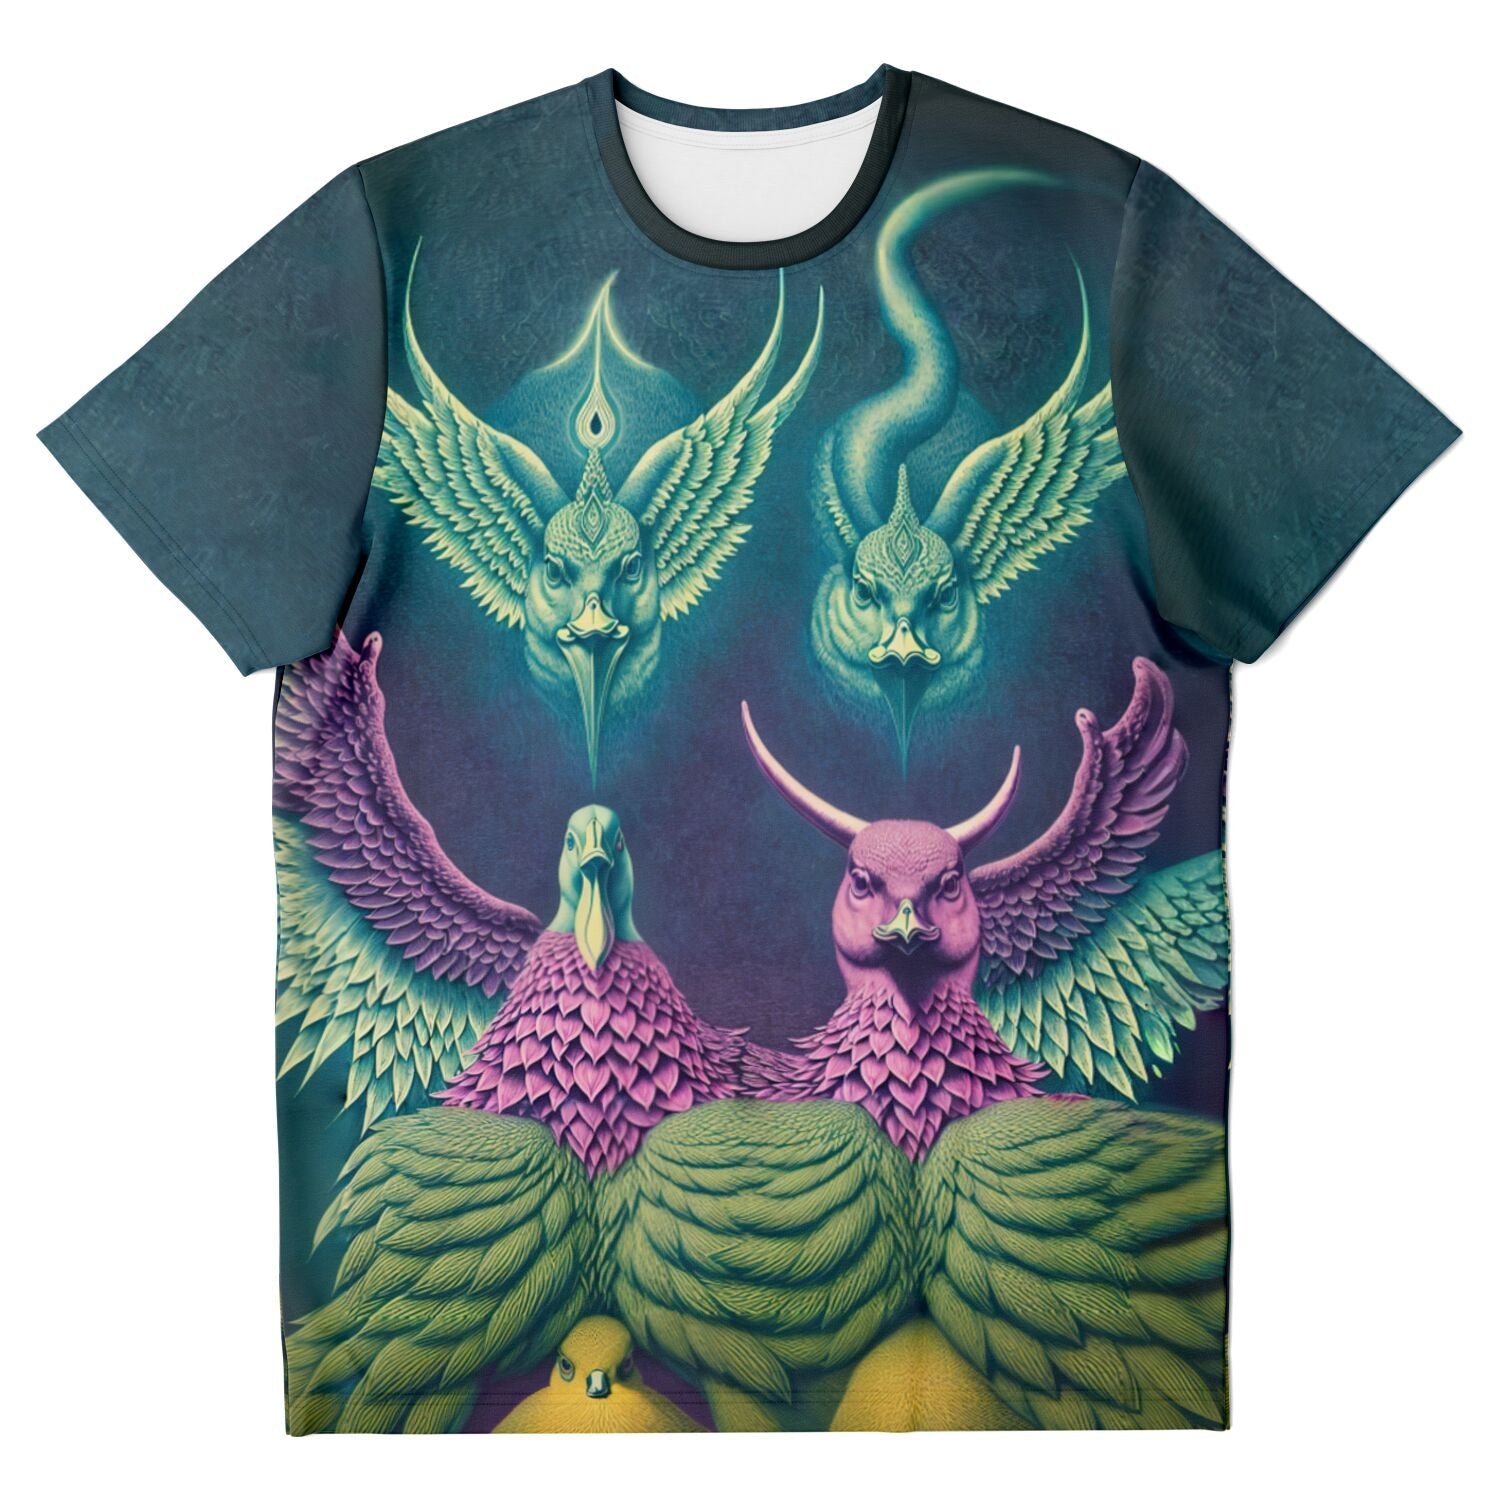 T-shirt XS Duck Baphomet: Neopagan Surreal Mythology | Balance, Strength, Peace | Mysterious Avian Deity | Occult Graphic Art T-Shirt